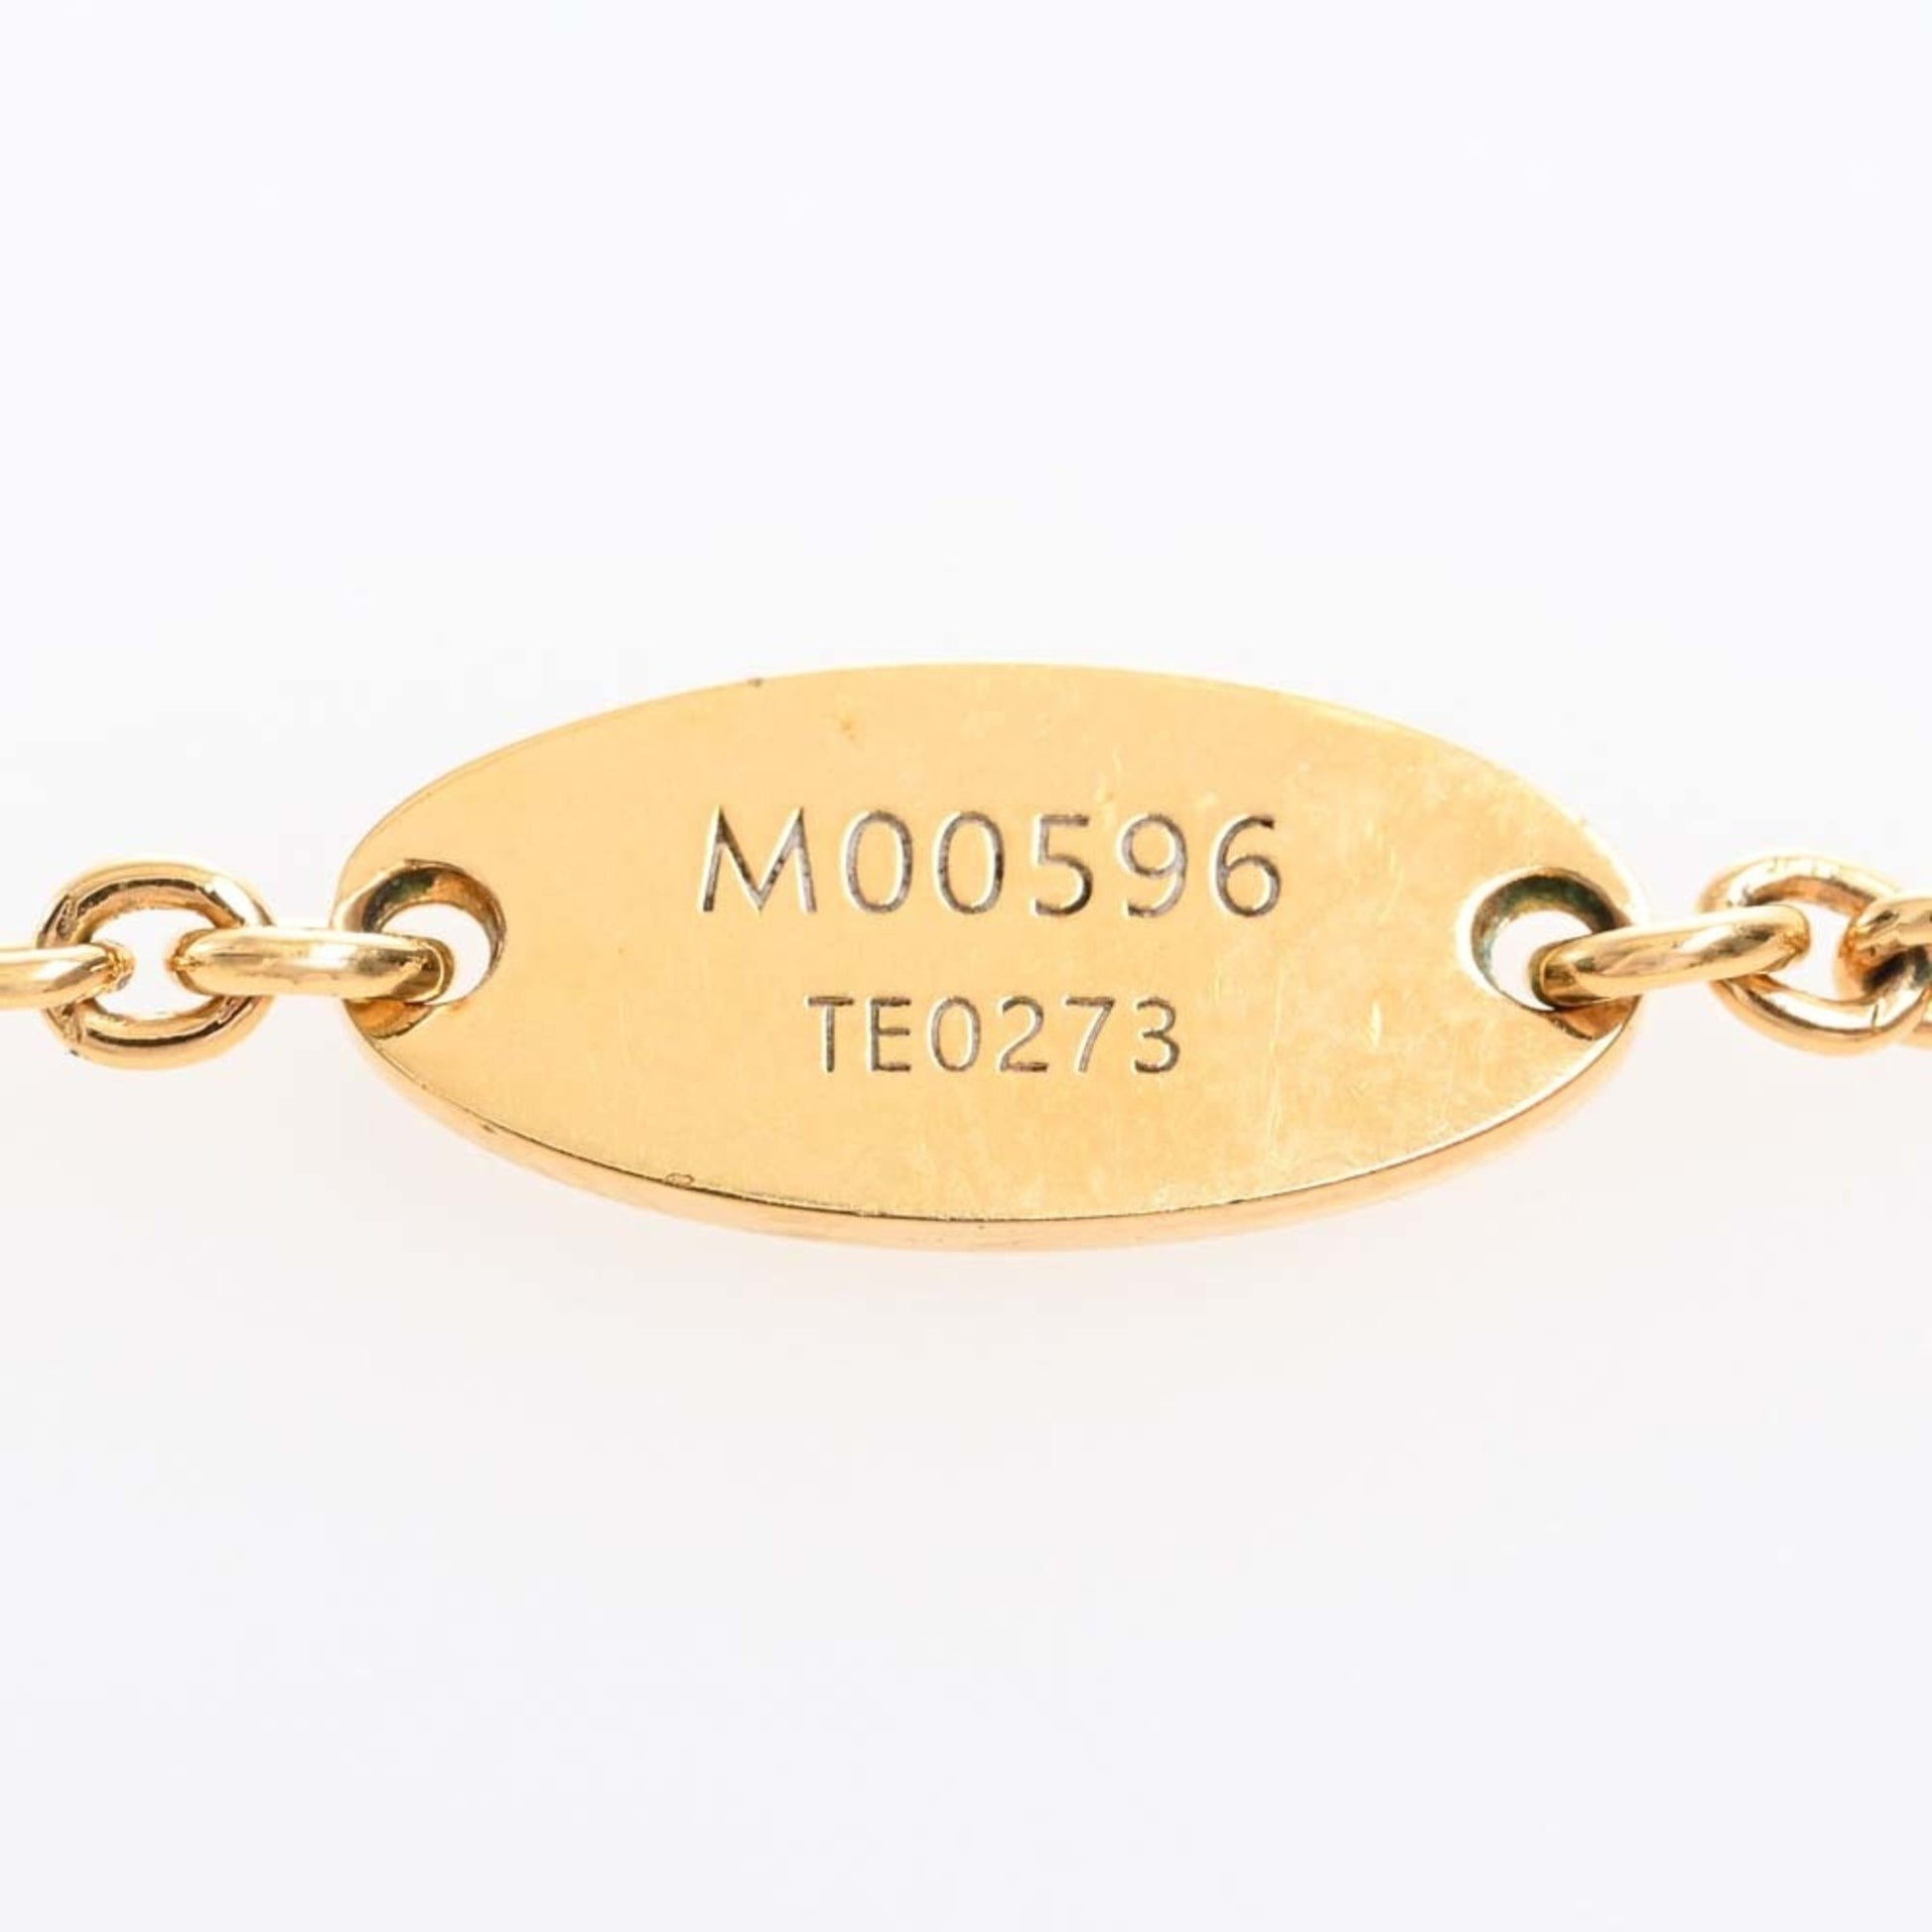 LOUIS VUITTON Rhinestone Collier LV Iconic Necklace M00596 Gold Women's